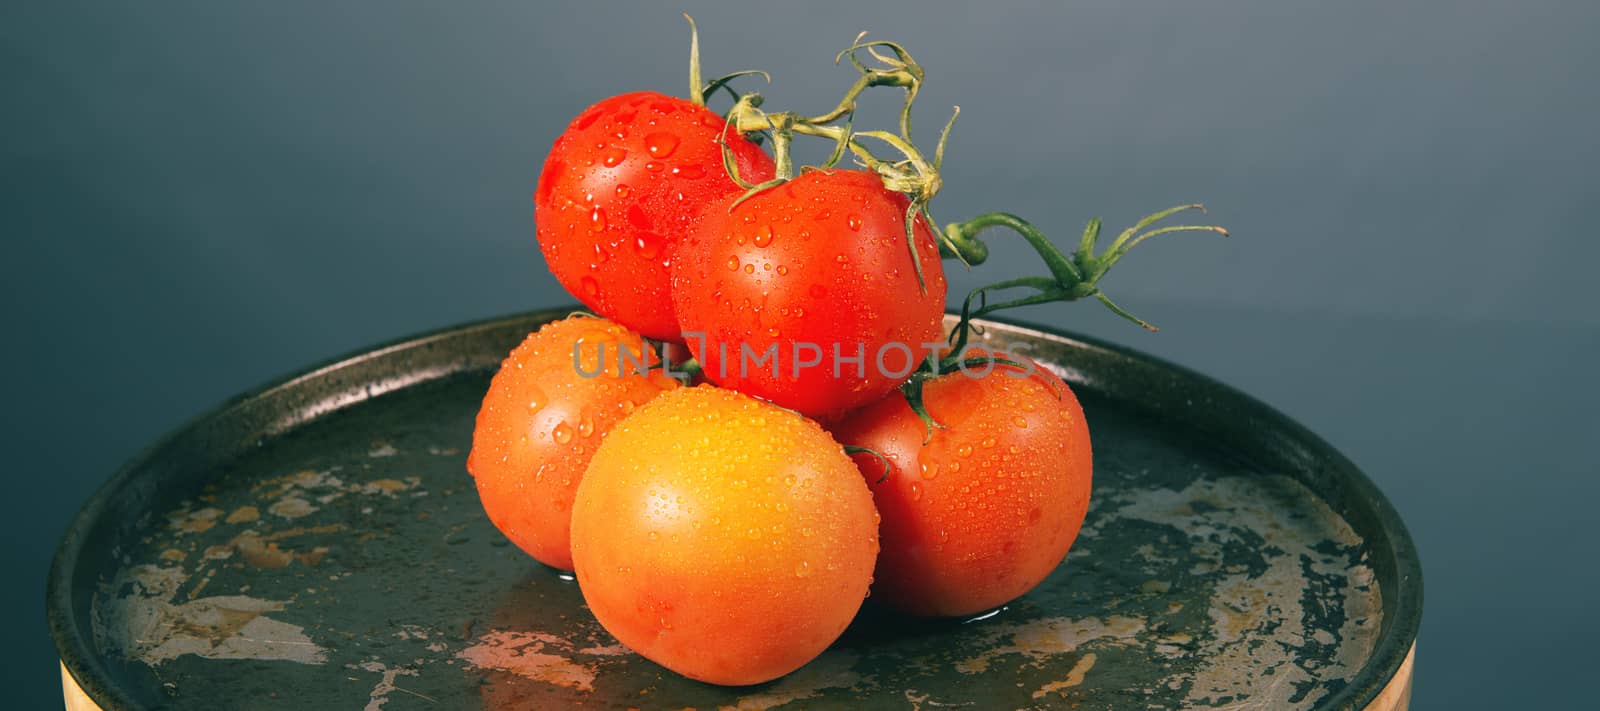 Red ripe fresh tomatoes by artistrobd